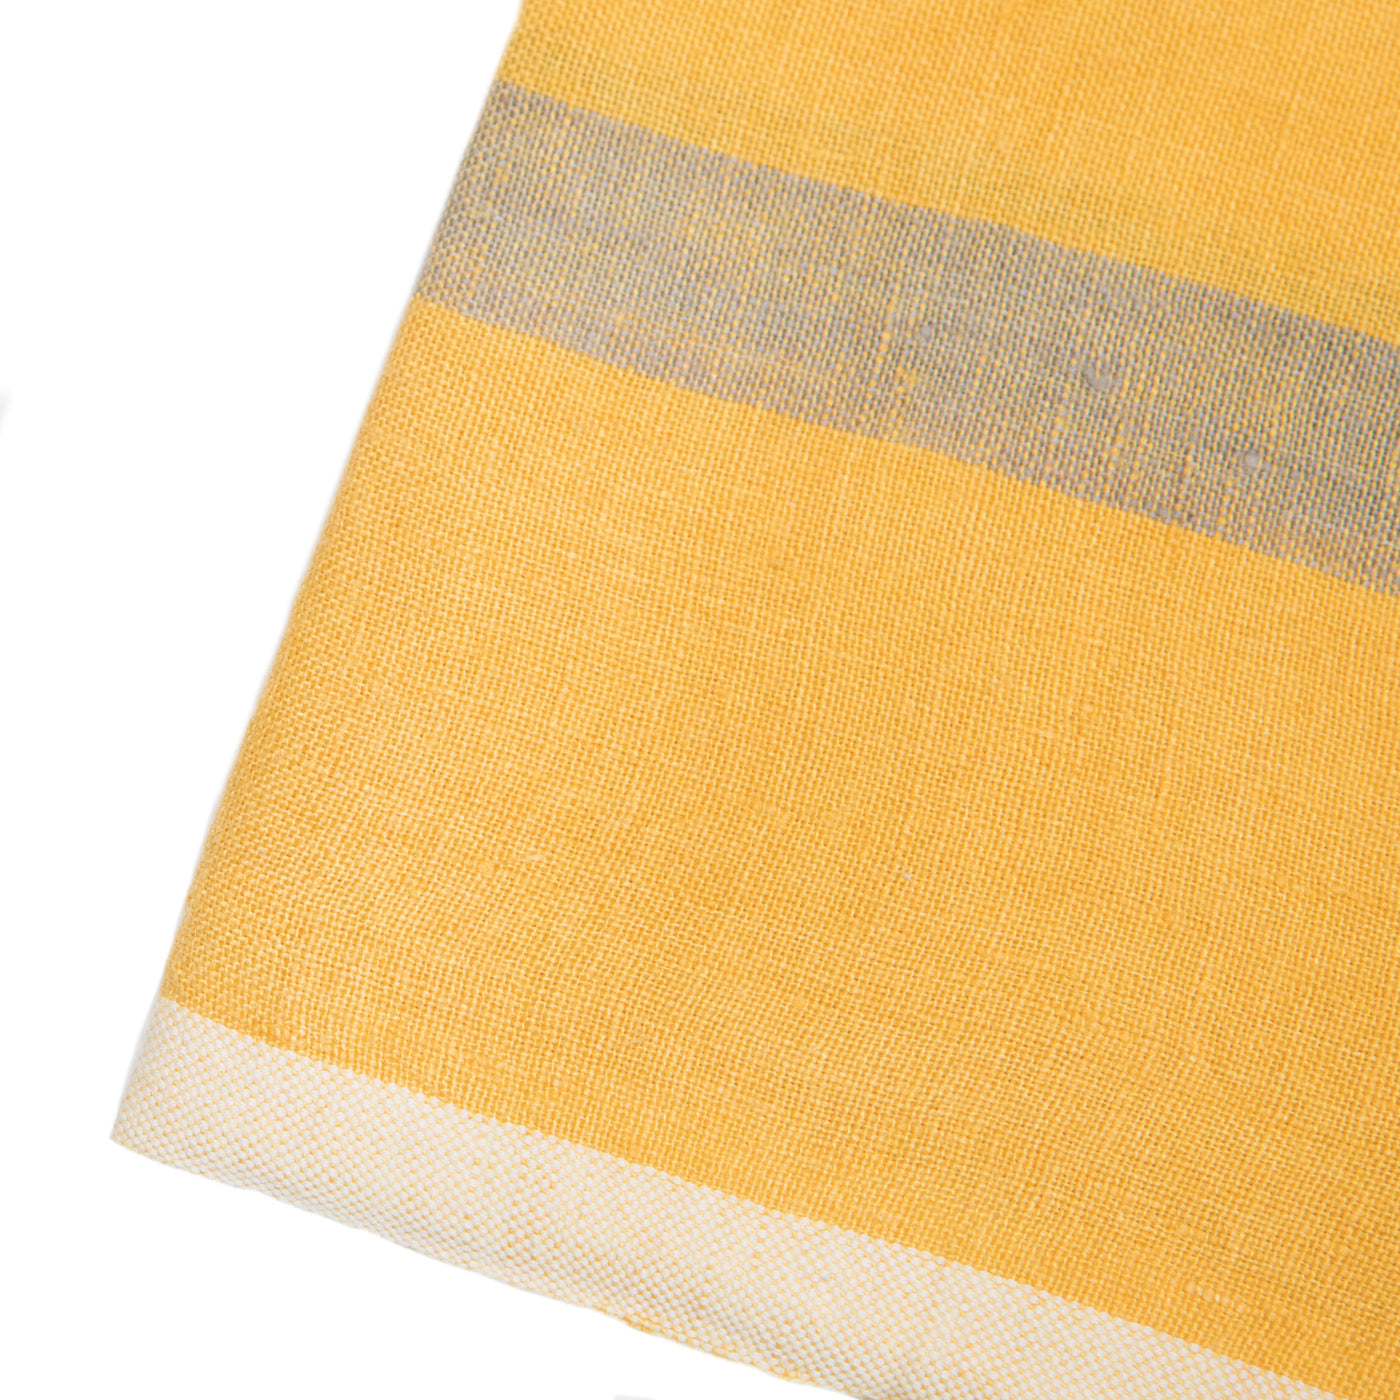 Laundered Linen Kitchen Towels Mustard & Grey, Set of 2